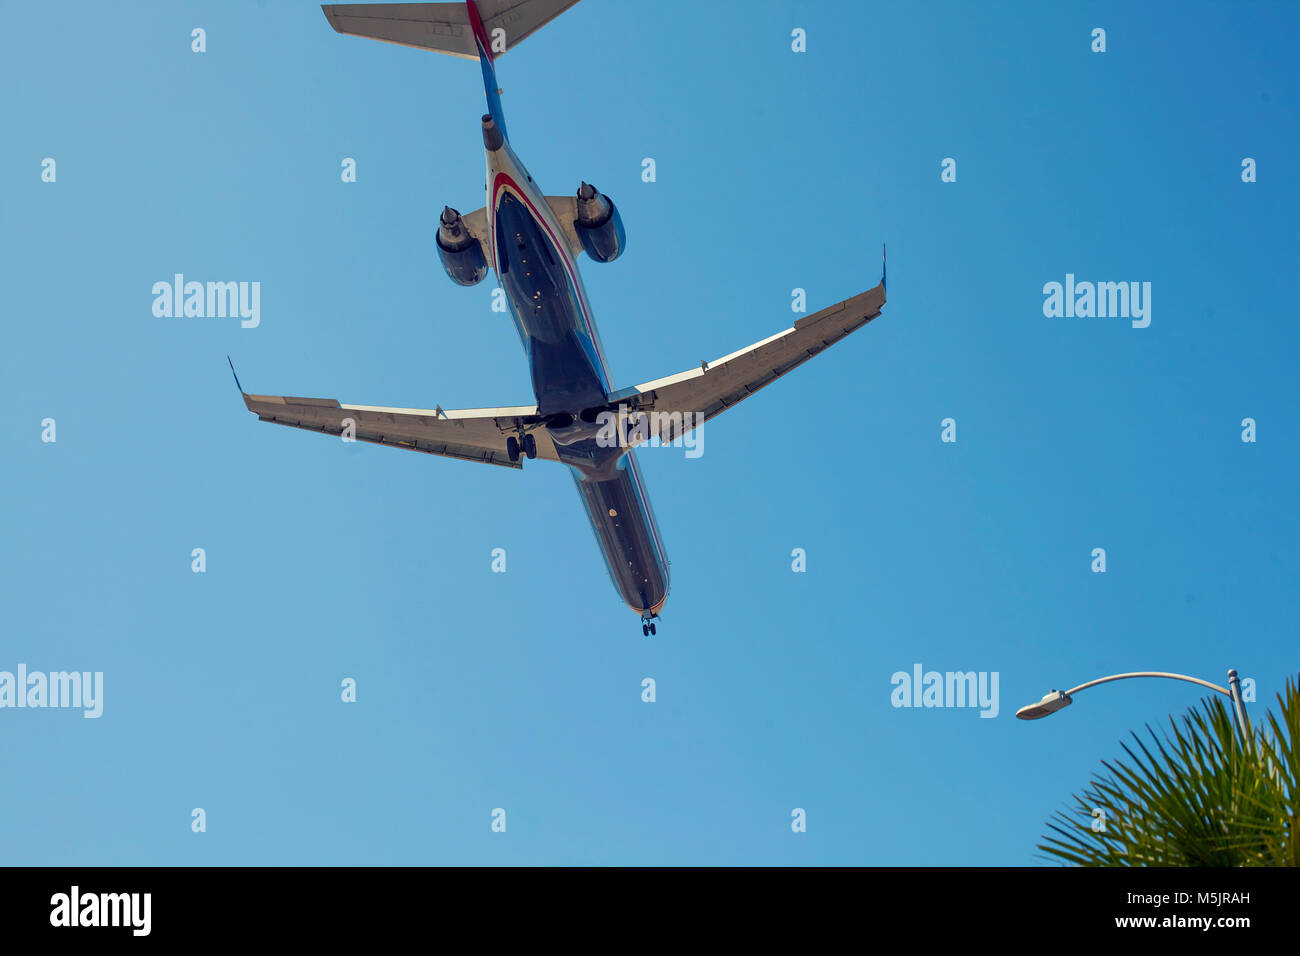 Flugzeug auf dem Himmel mit Palmen umgeben Stockfoto